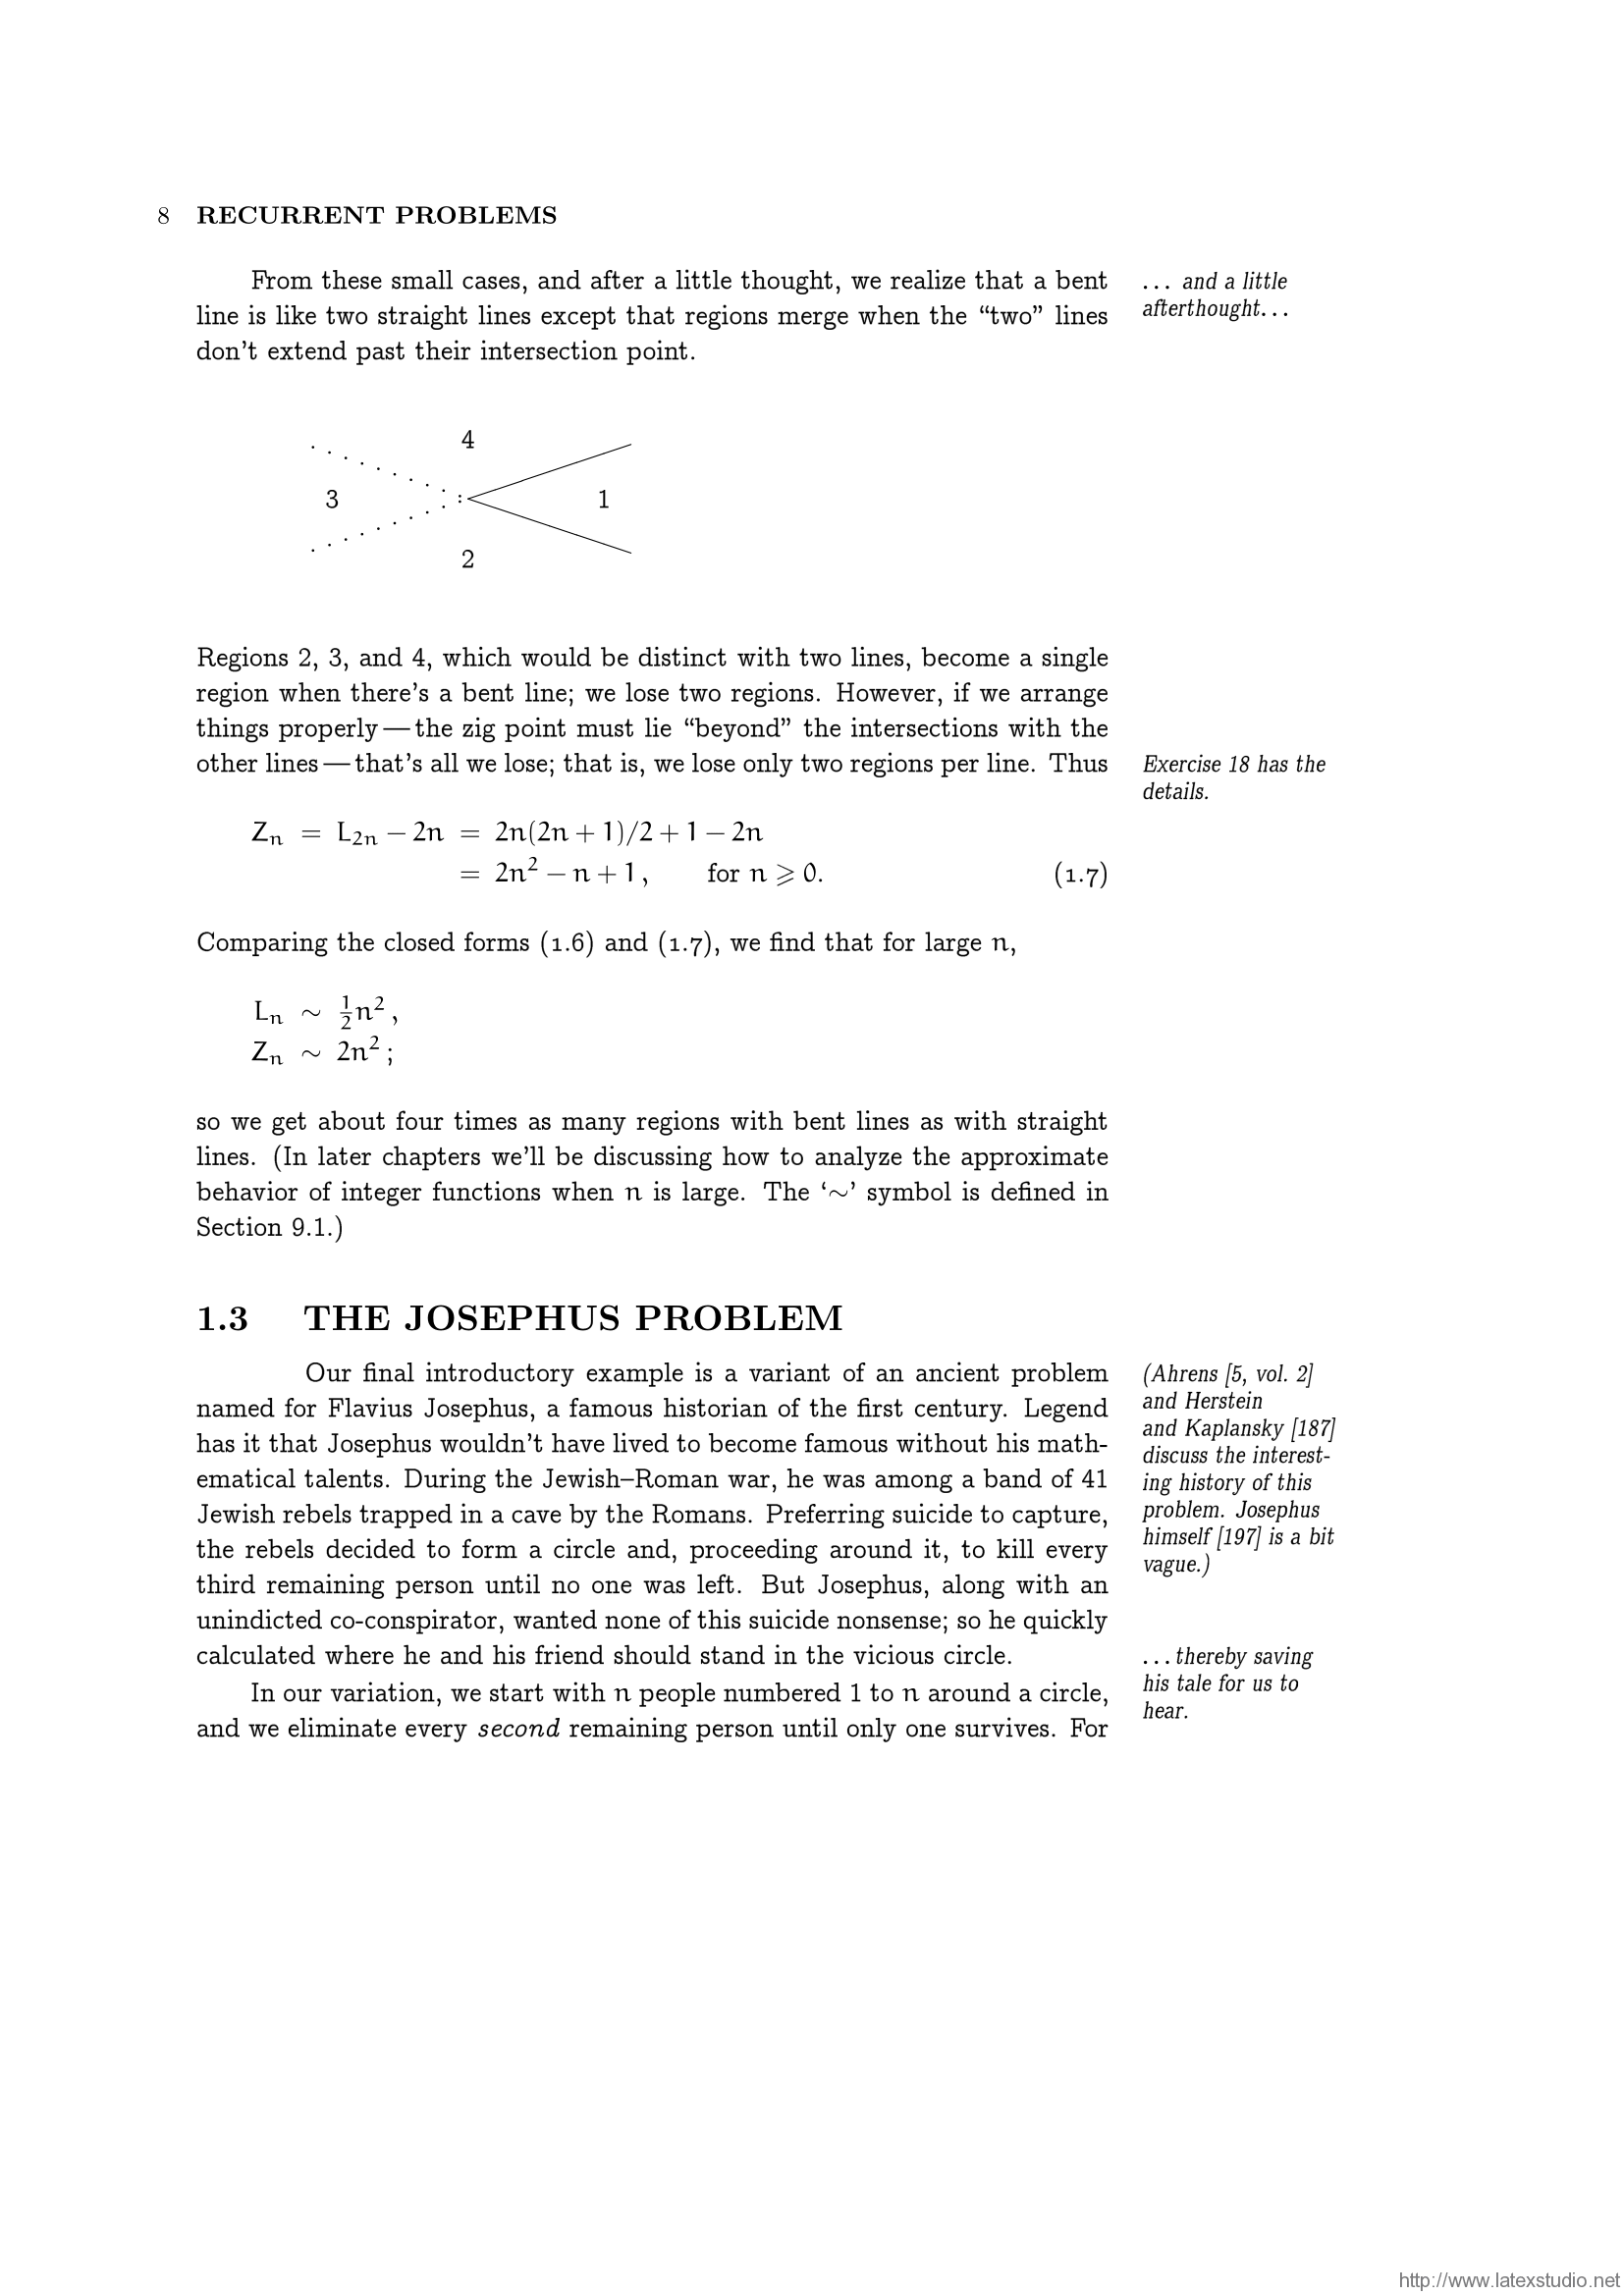 concrete_mathematics_chap1-08